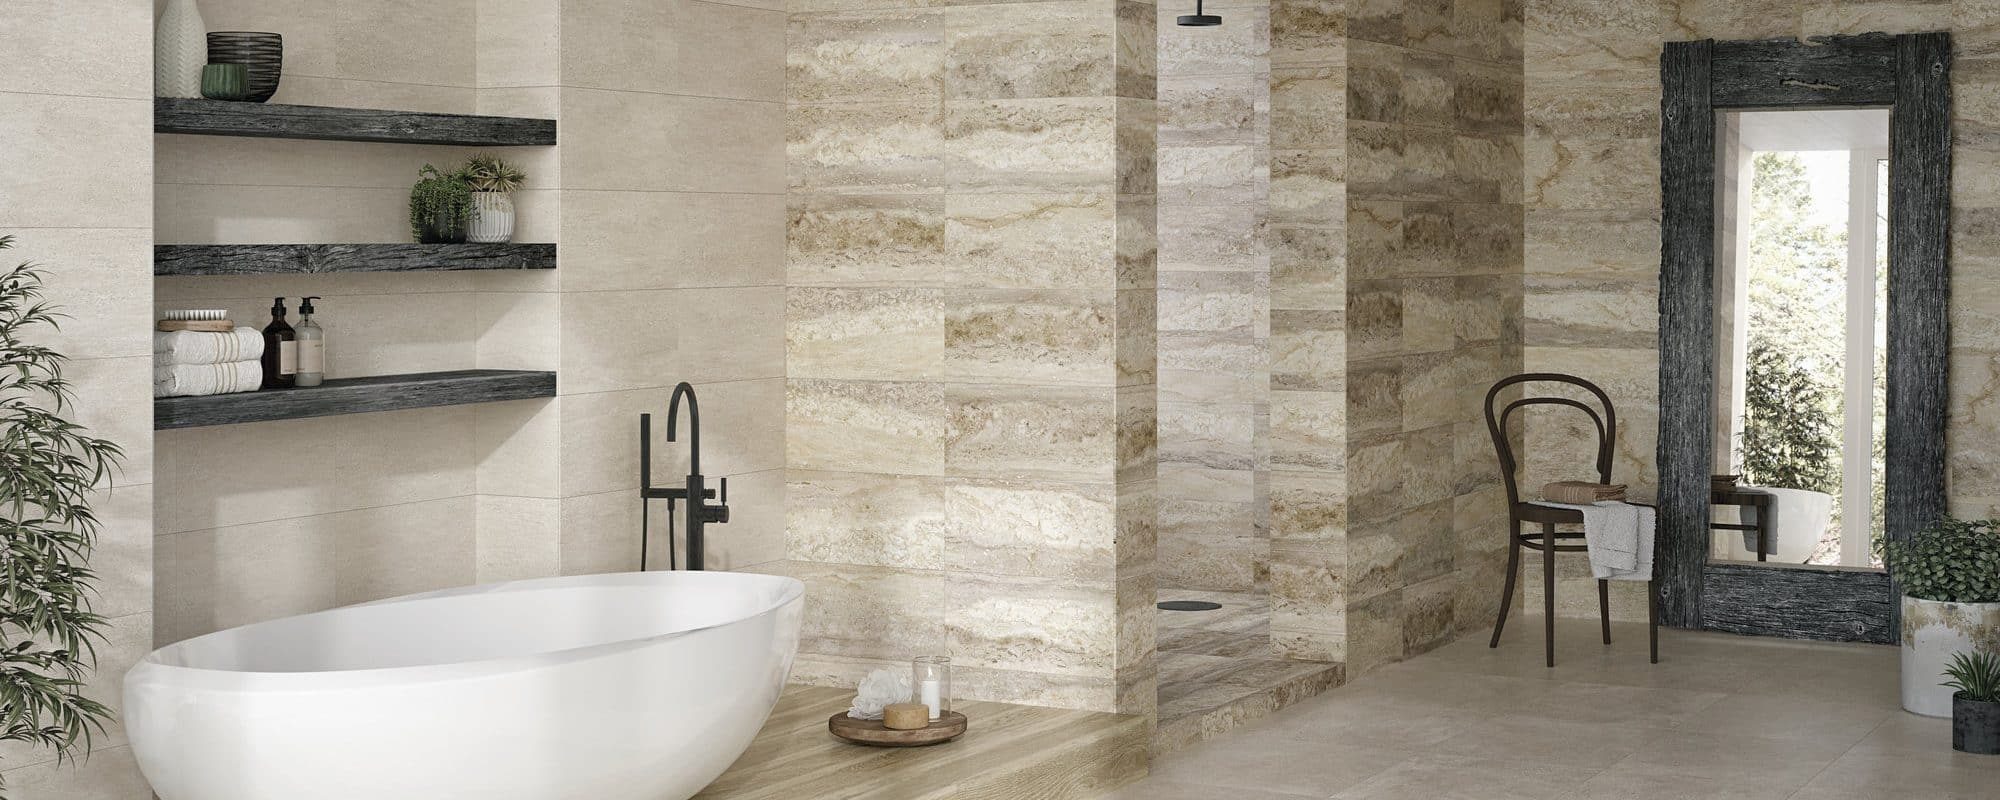 WABI SABI cement effect porcelain bathroom tiles london slider 4